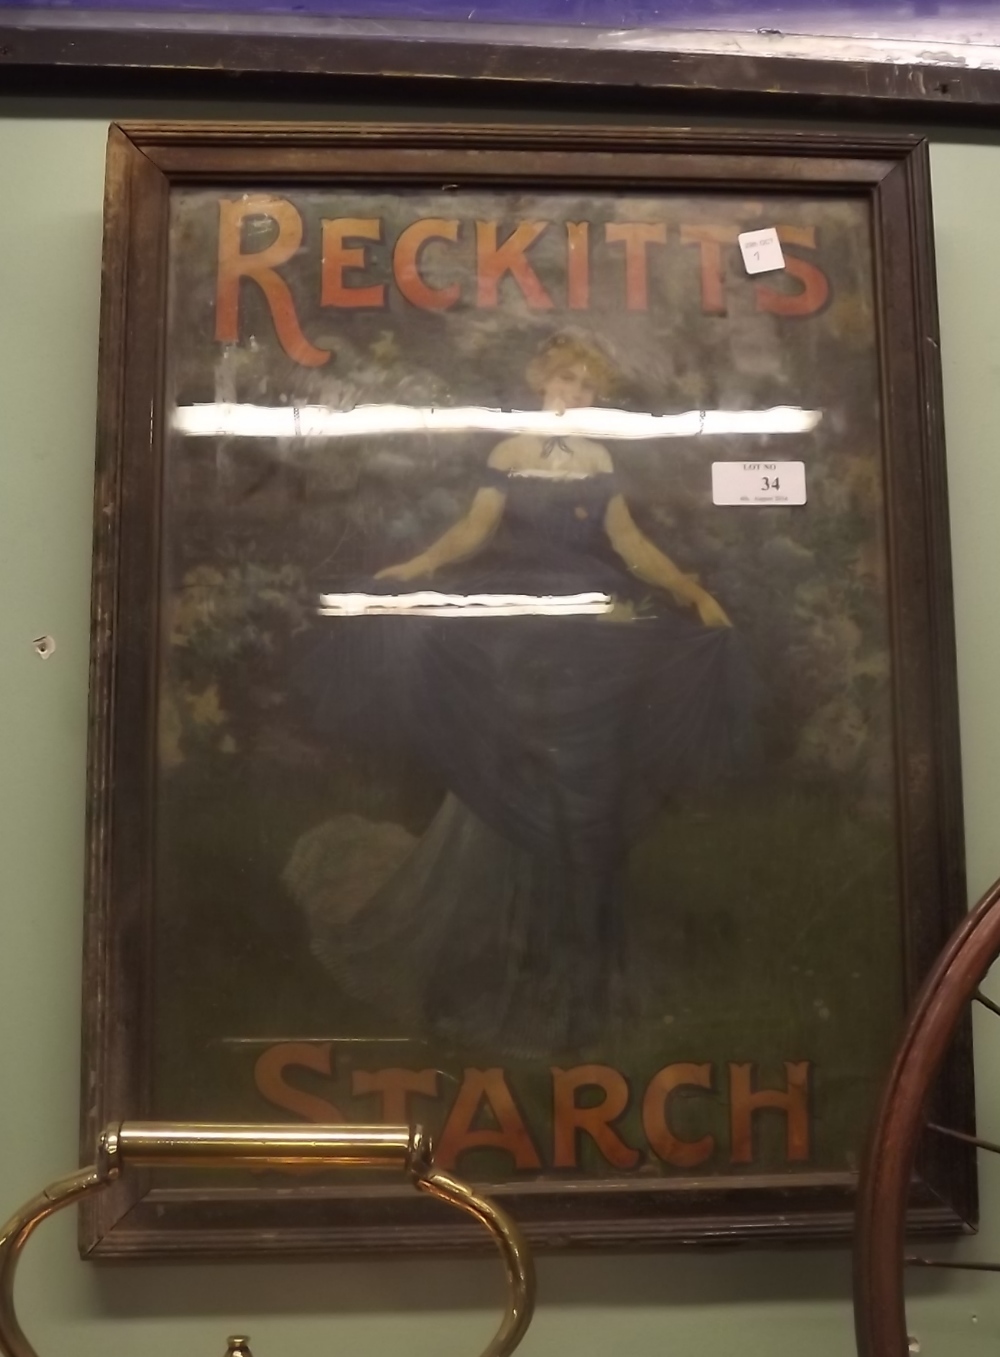 Original RECKITTS STARCH framed cardboard advertisement.